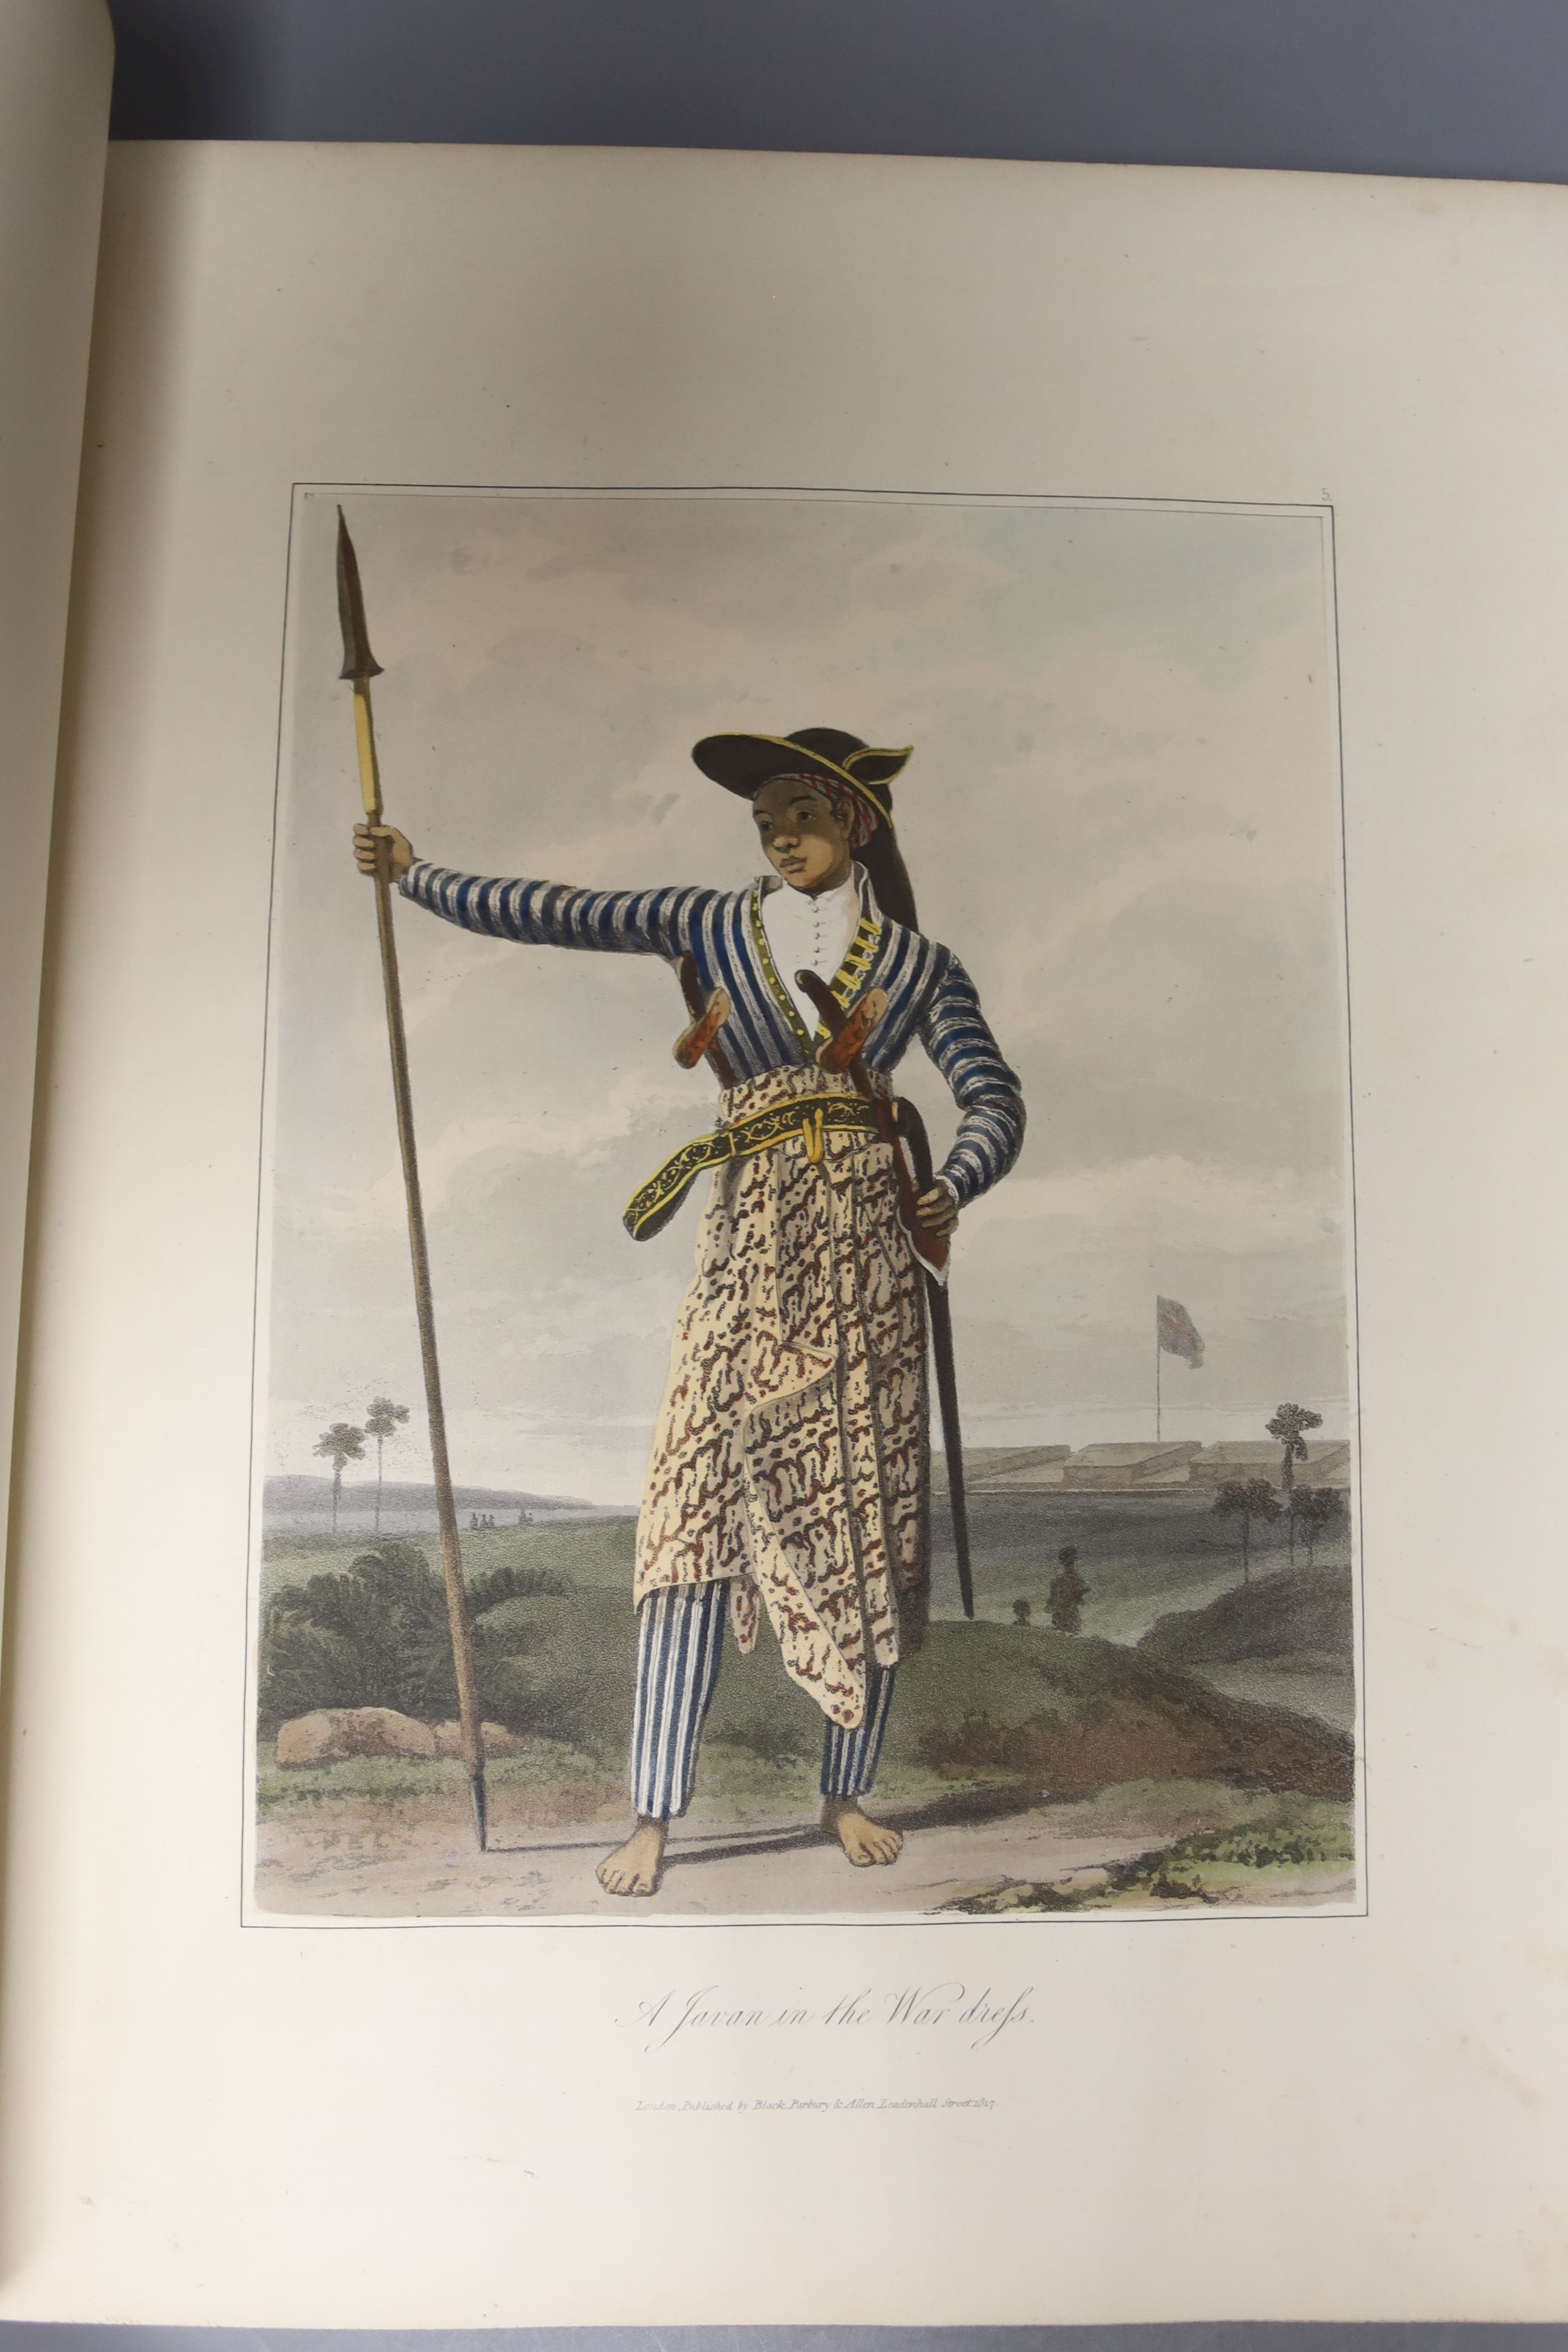 Raffles, Thomas, Stamford, Sir - Plates to Raffles History of Java, plates badly water stained, Henry G. Bohn, London, 1844